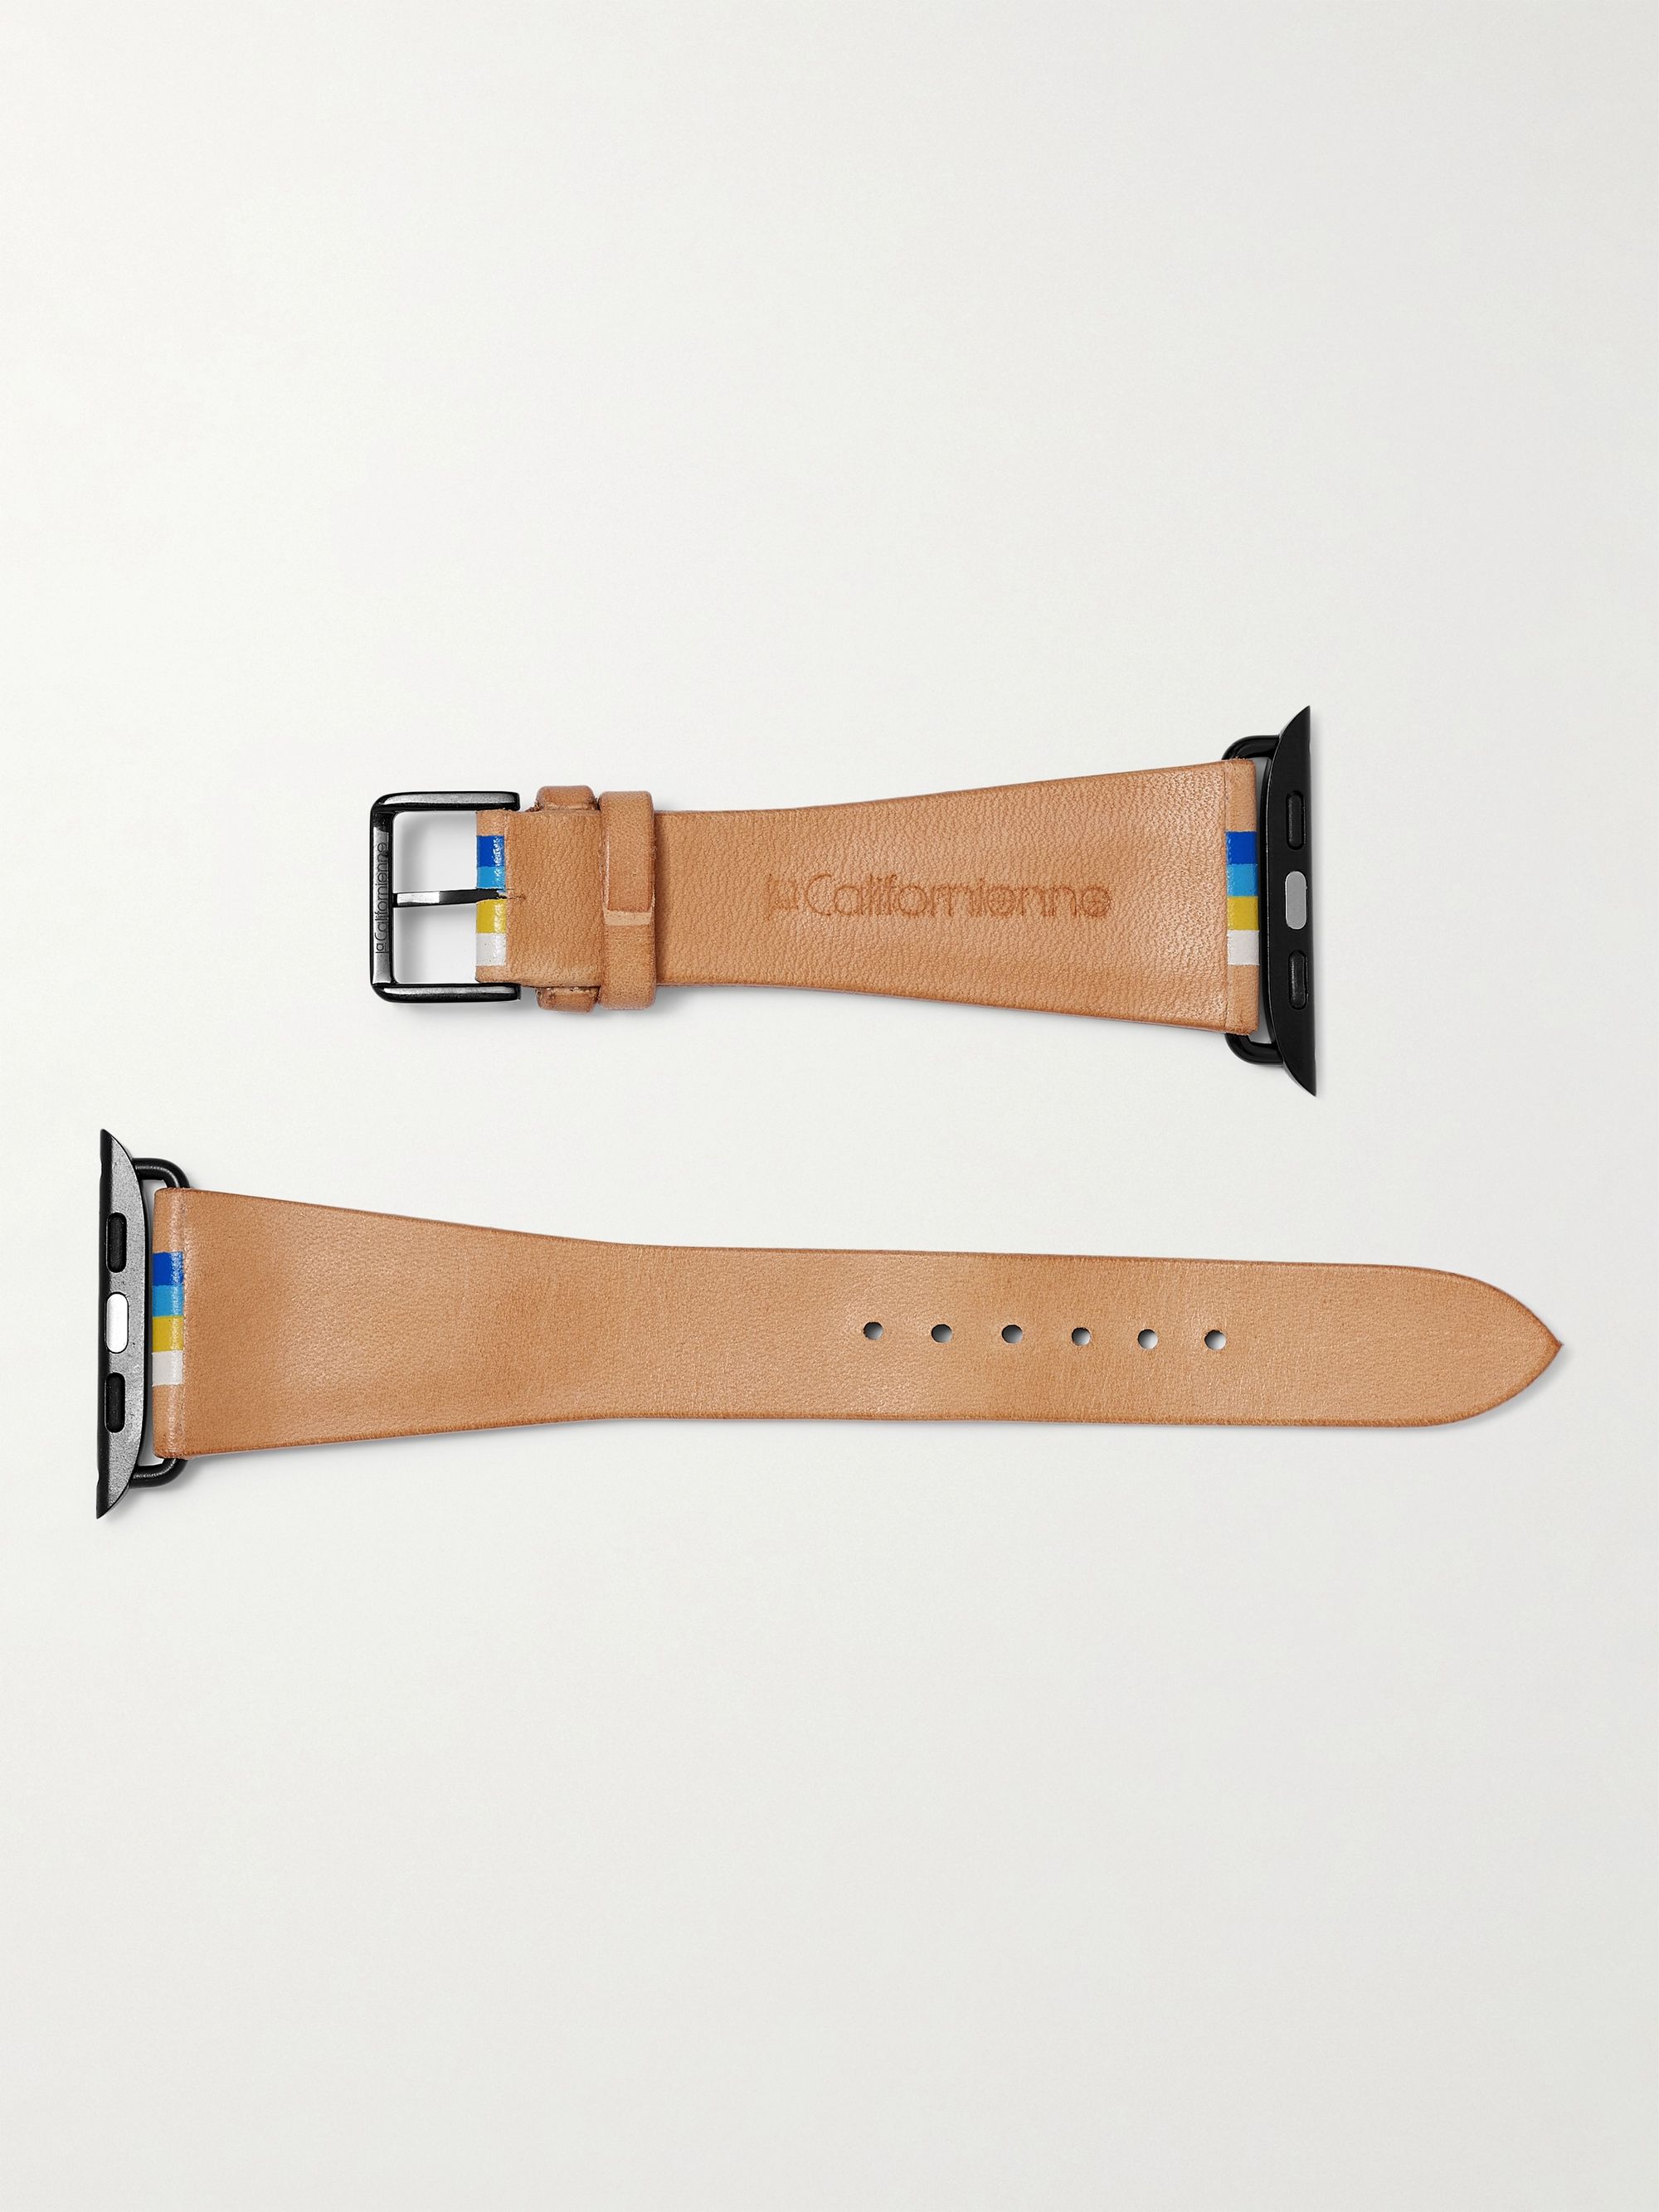 LA CALIFORNIENNE Seabright Striped Leather Watch Strap